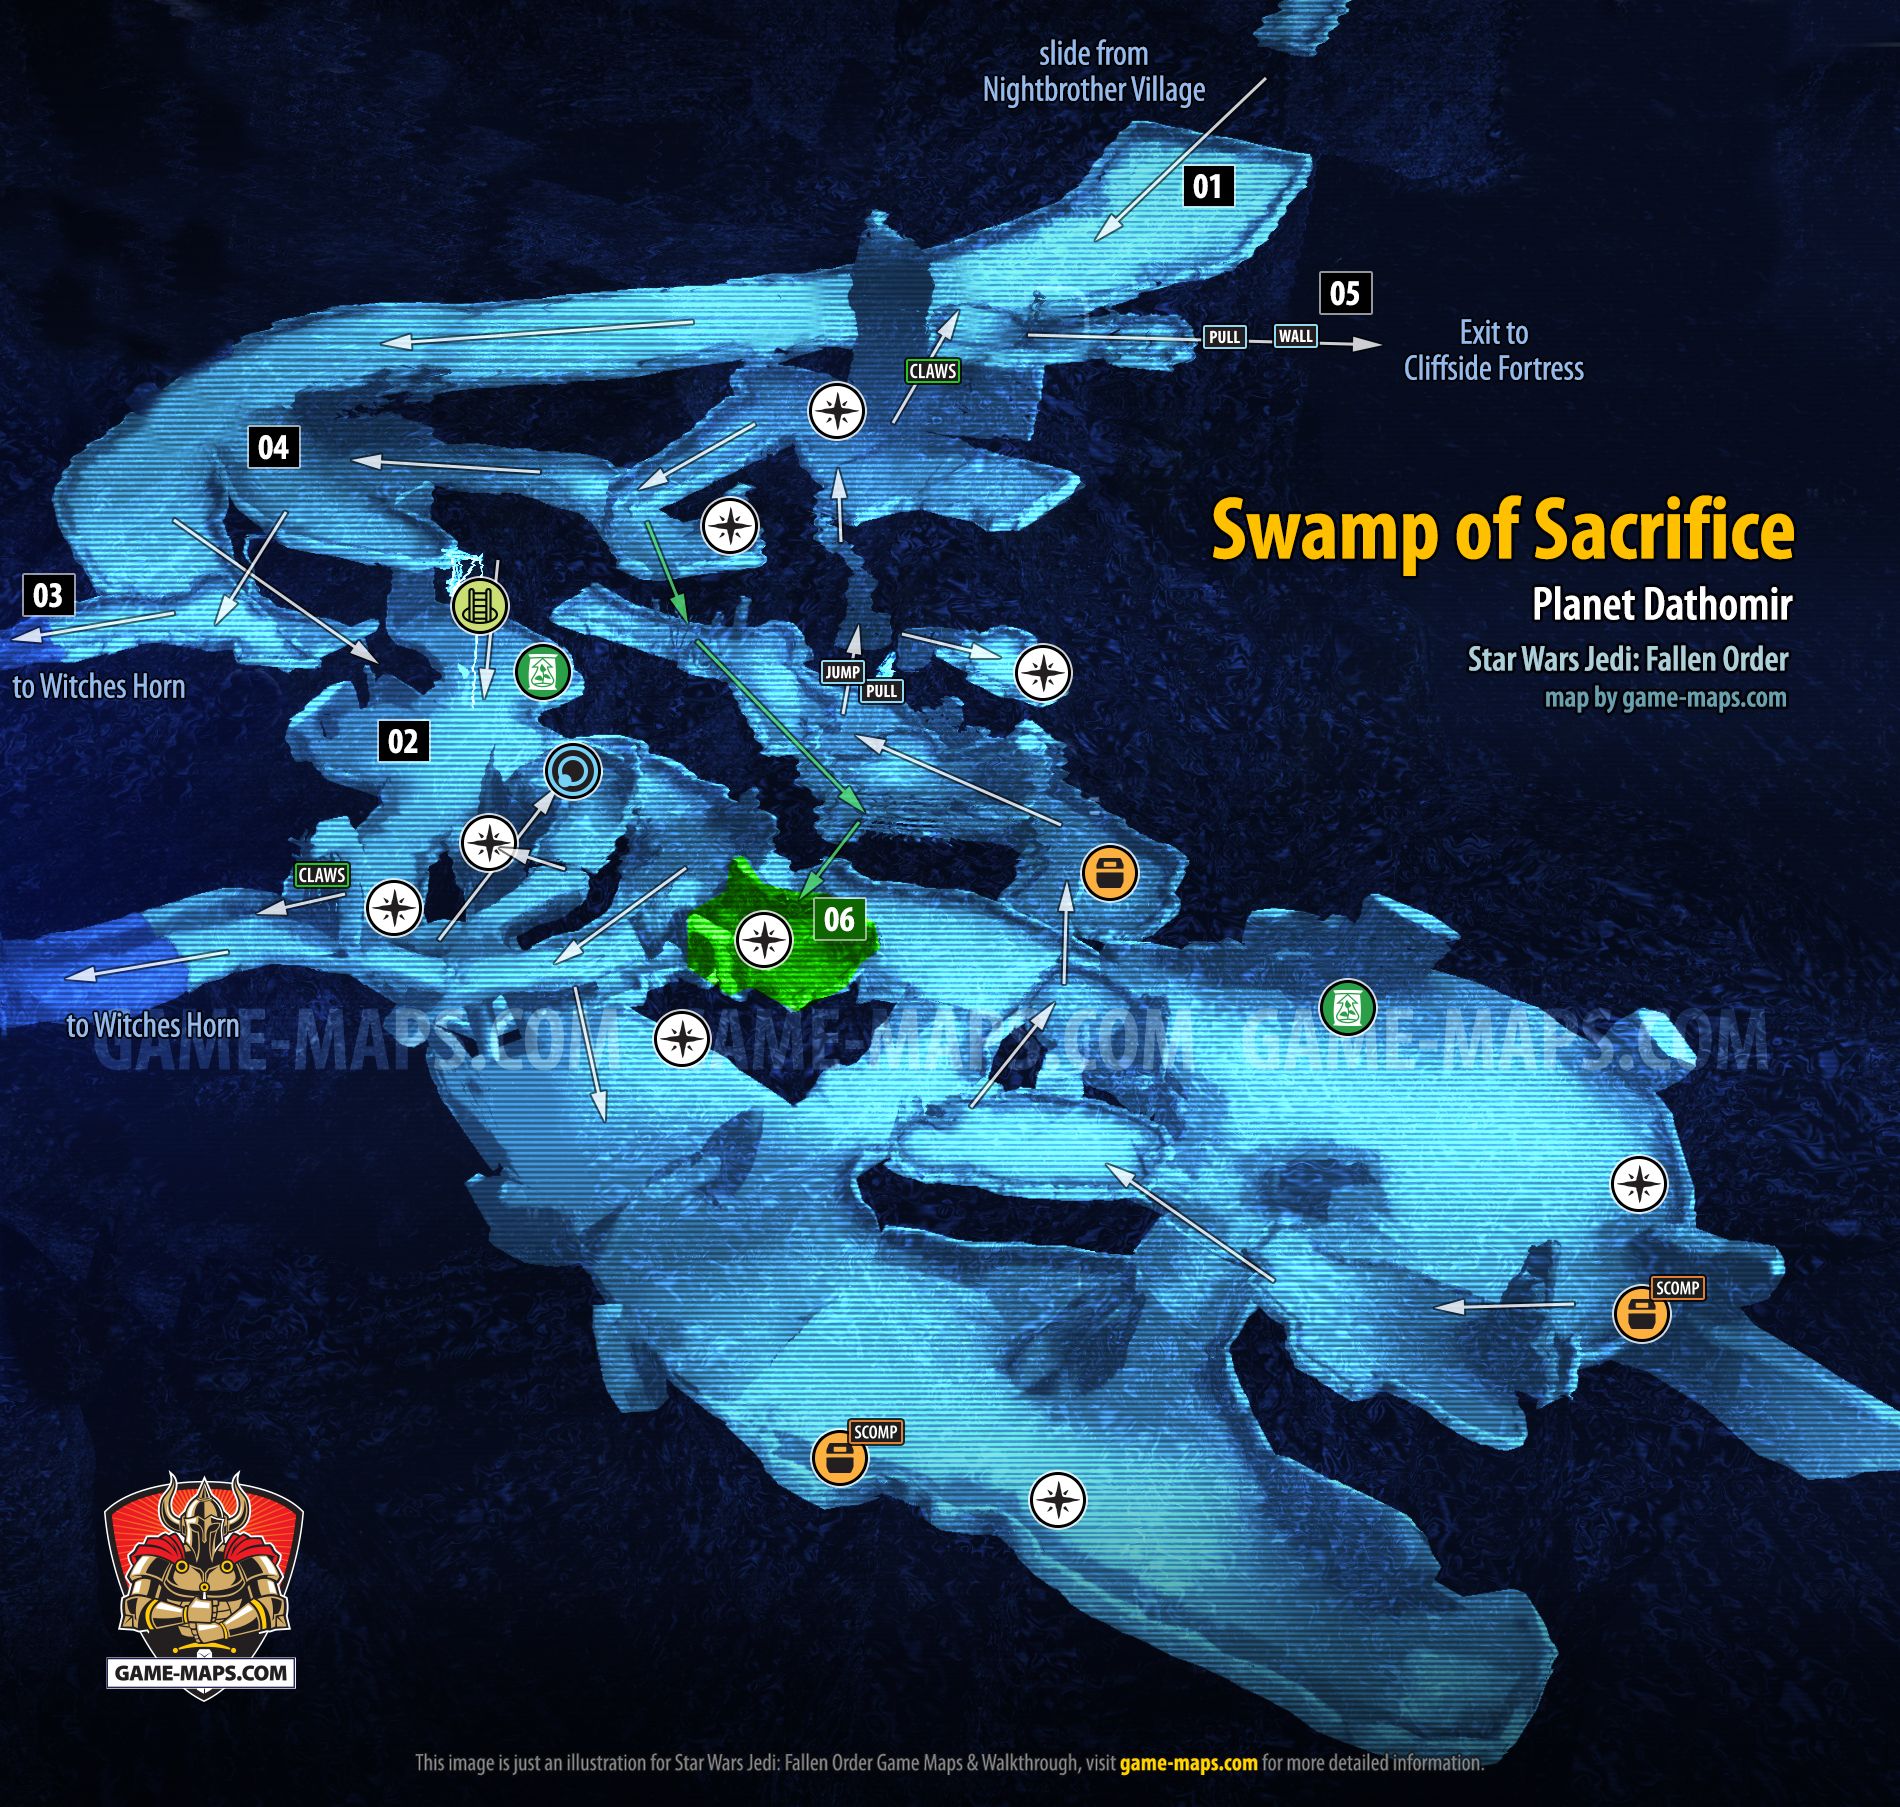 Swamp of Sacrifice Map, Planet Dathomir for Star Wars Jedi Fallen Order